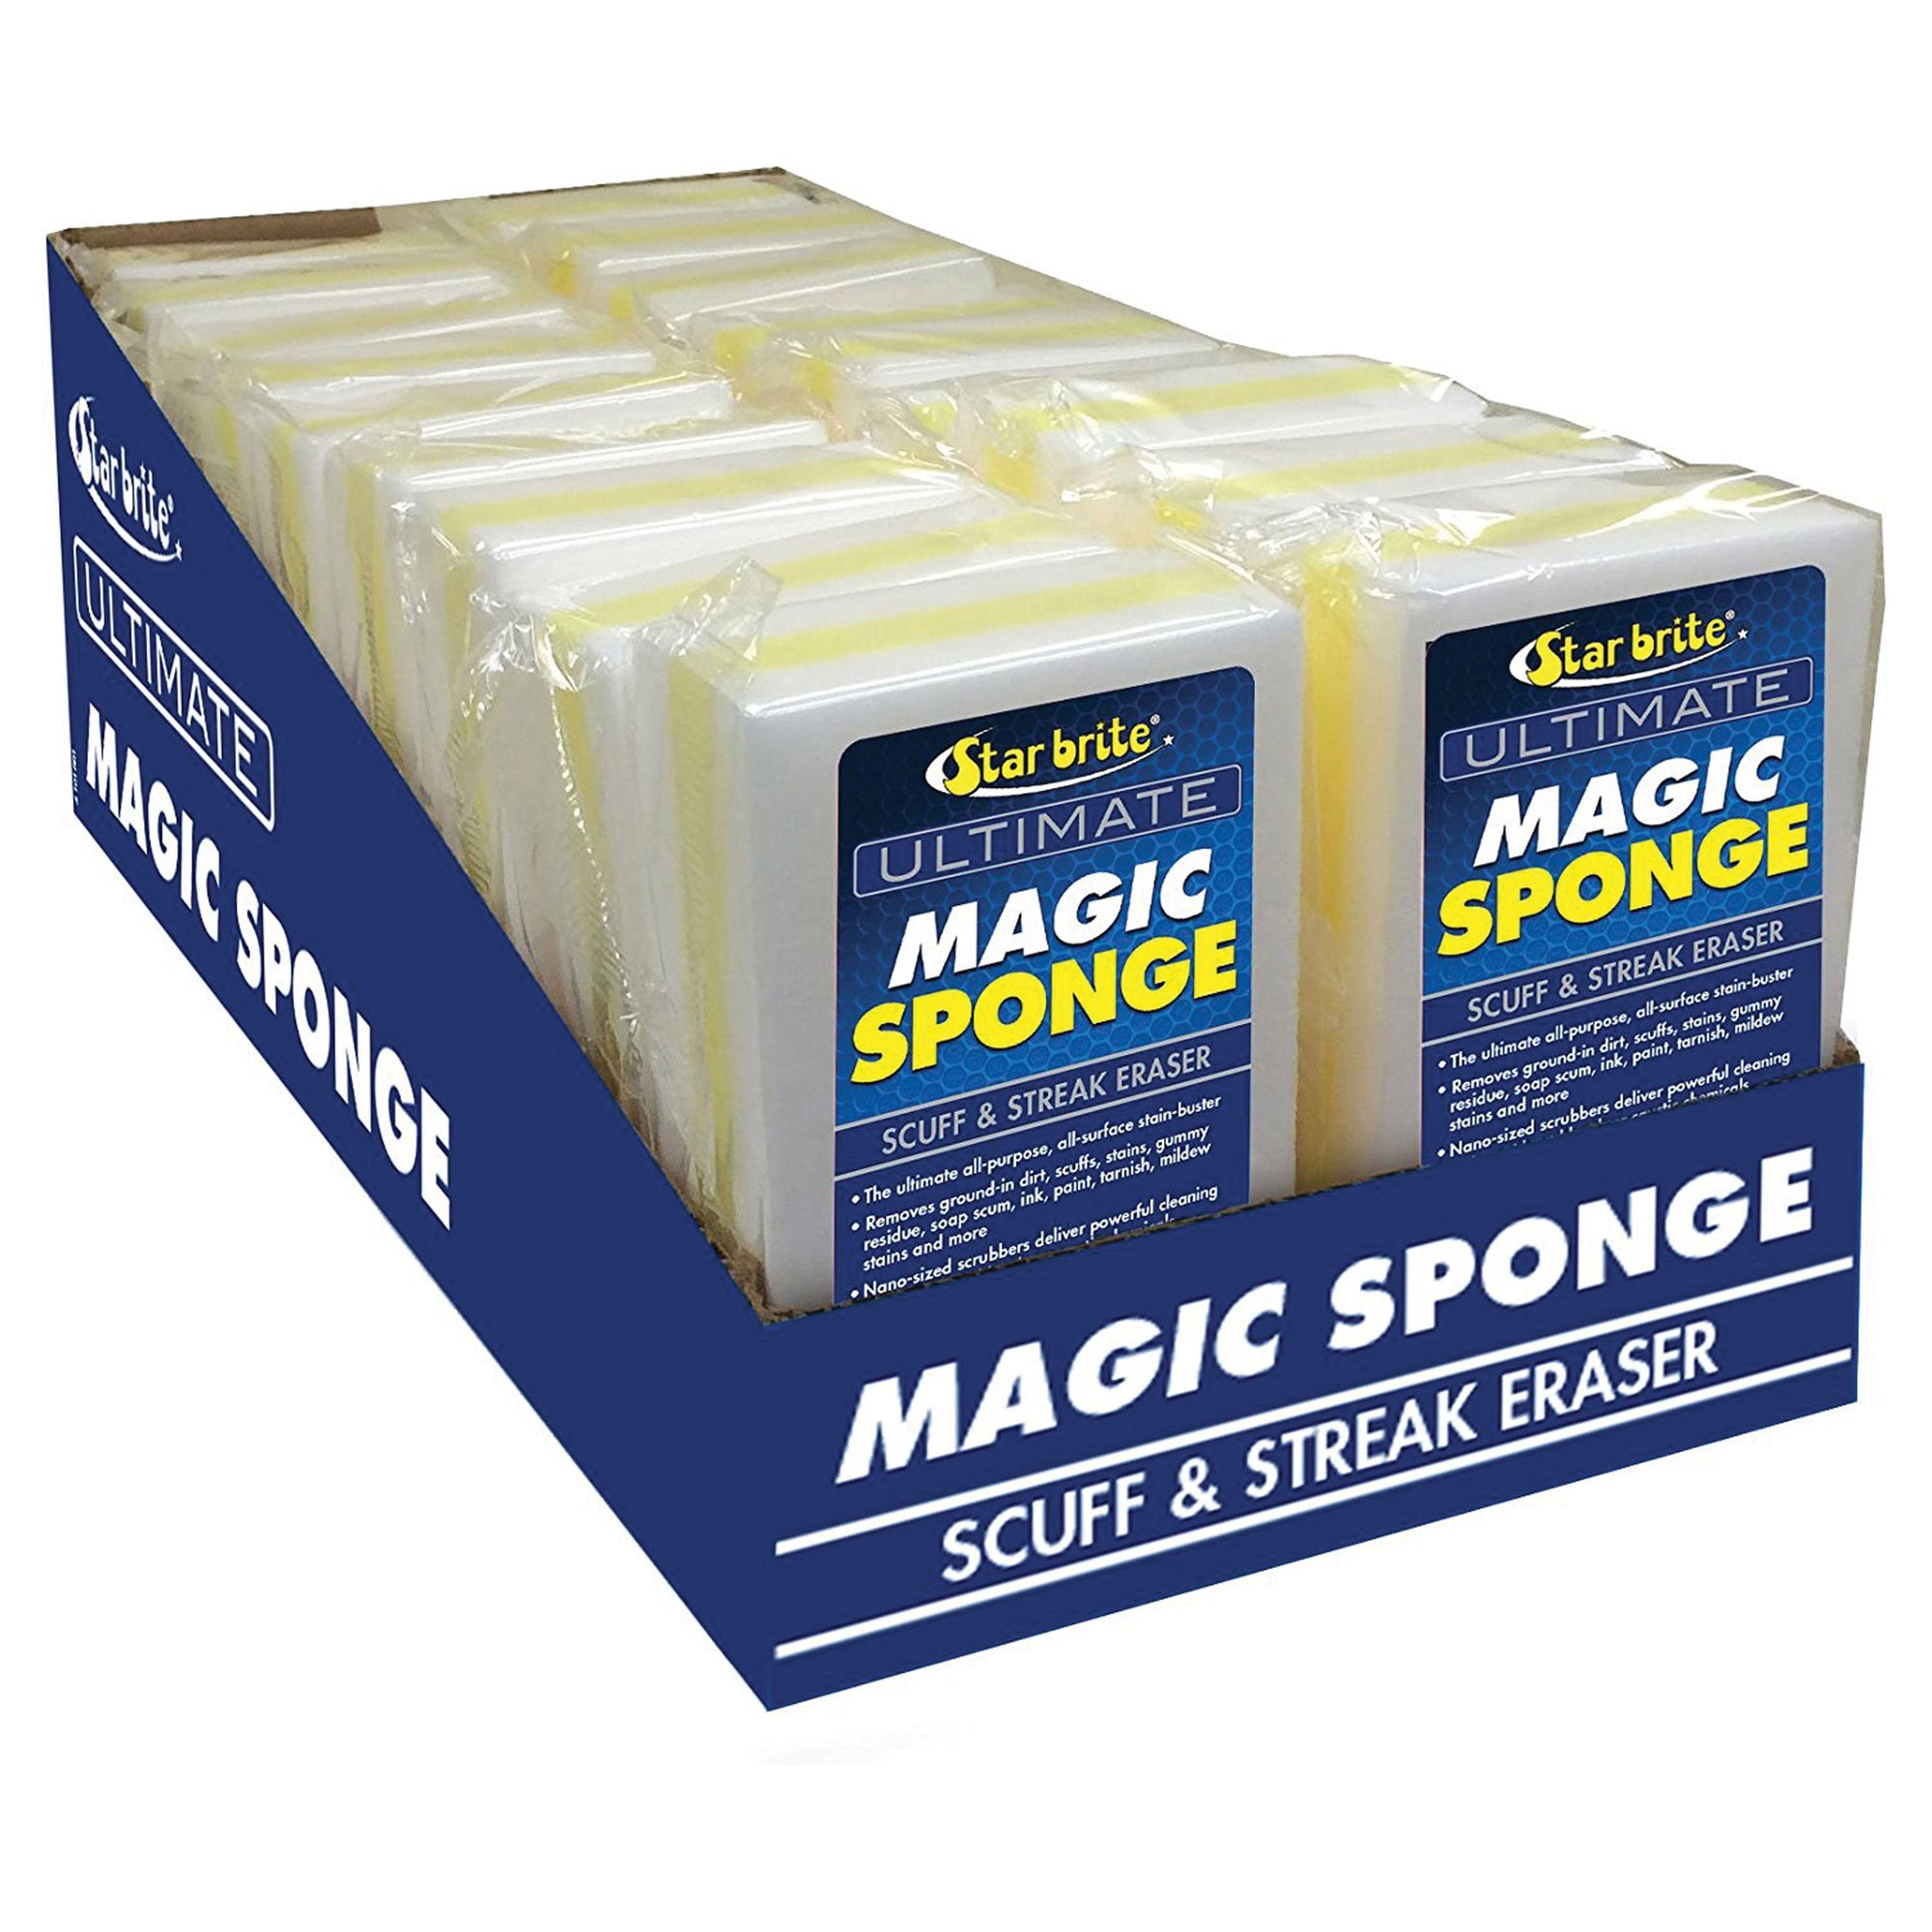 Star brite 041018 Ultimate Magic Sponge - Each